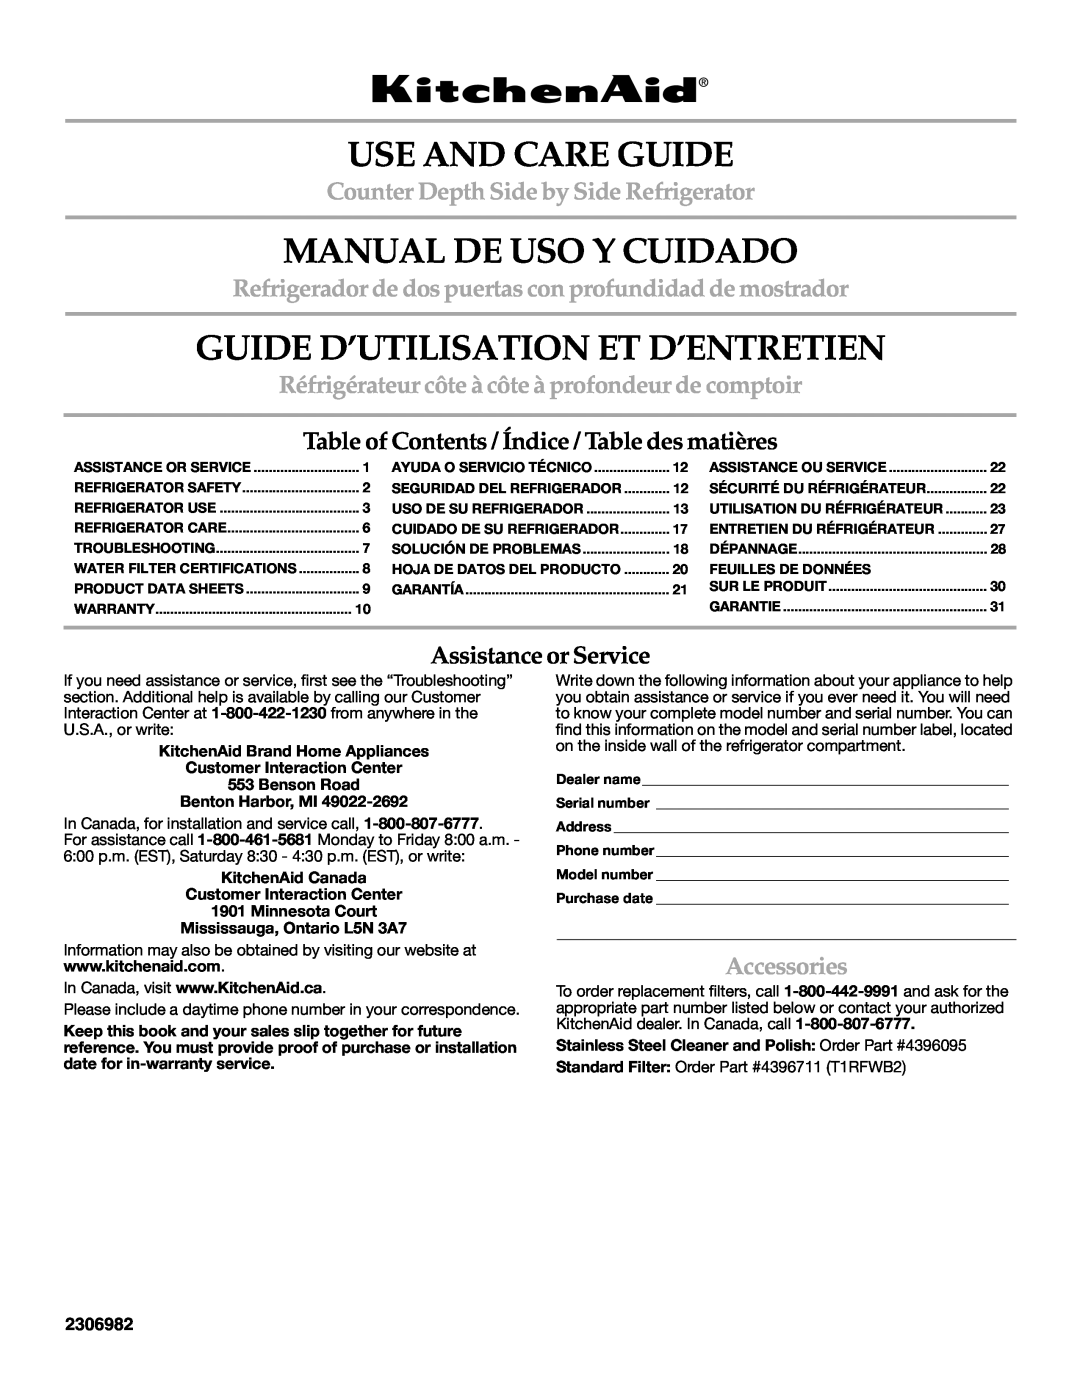 KitchenAid KSCS25INSS01 warranty Use And Care Guide, Manual De Uso Y Cuidado, Guide D’Utilisation Et D’Entretien, 2306982 